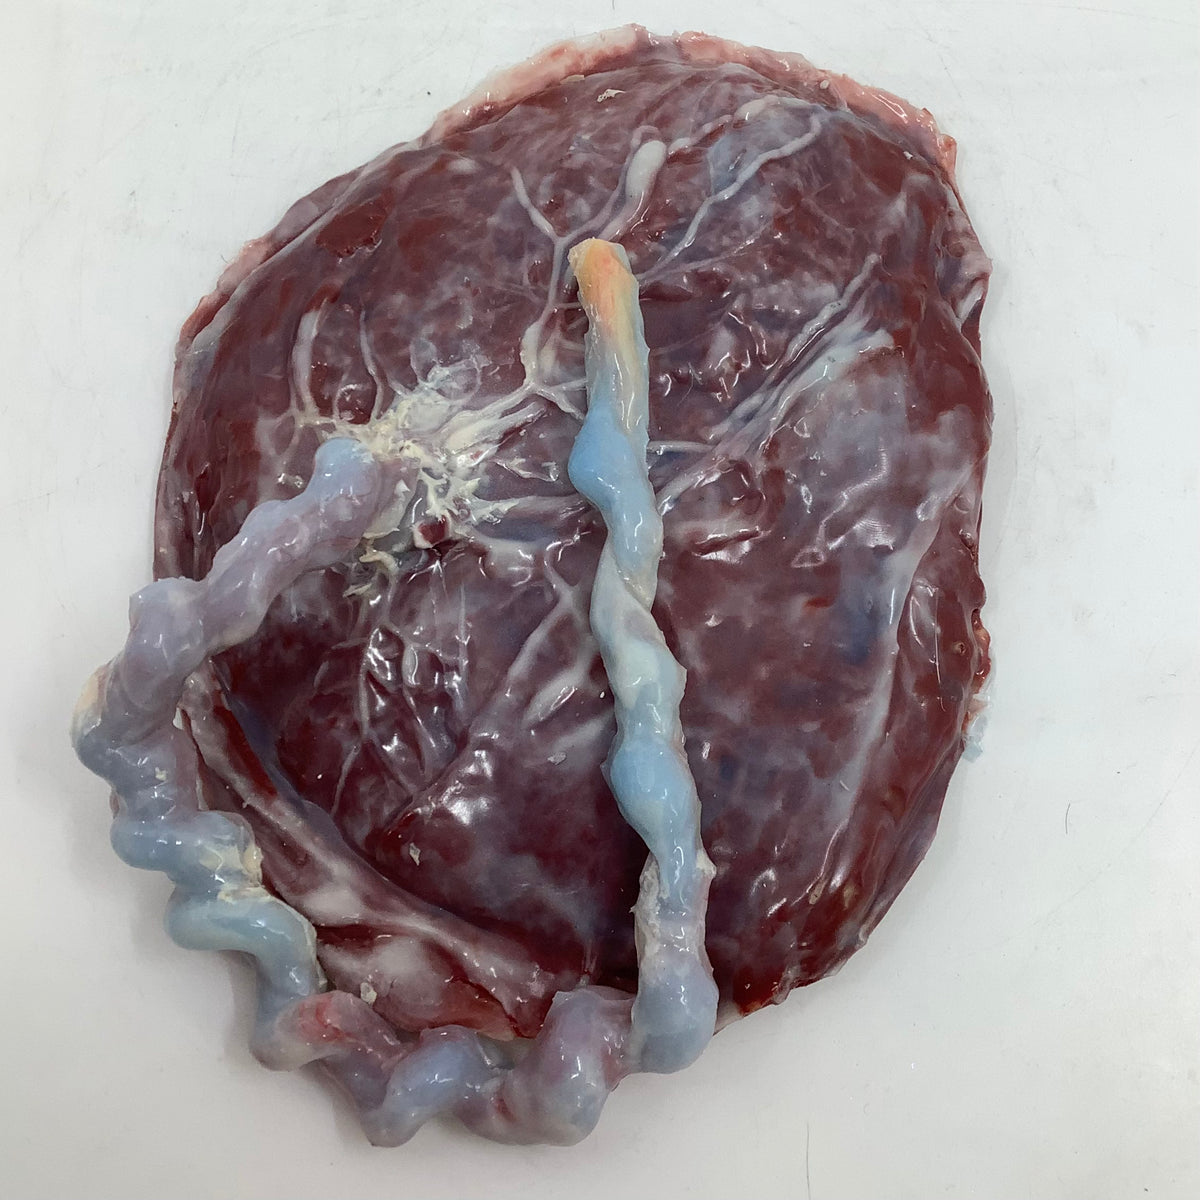 Full term Placenta And Umbilical Cord